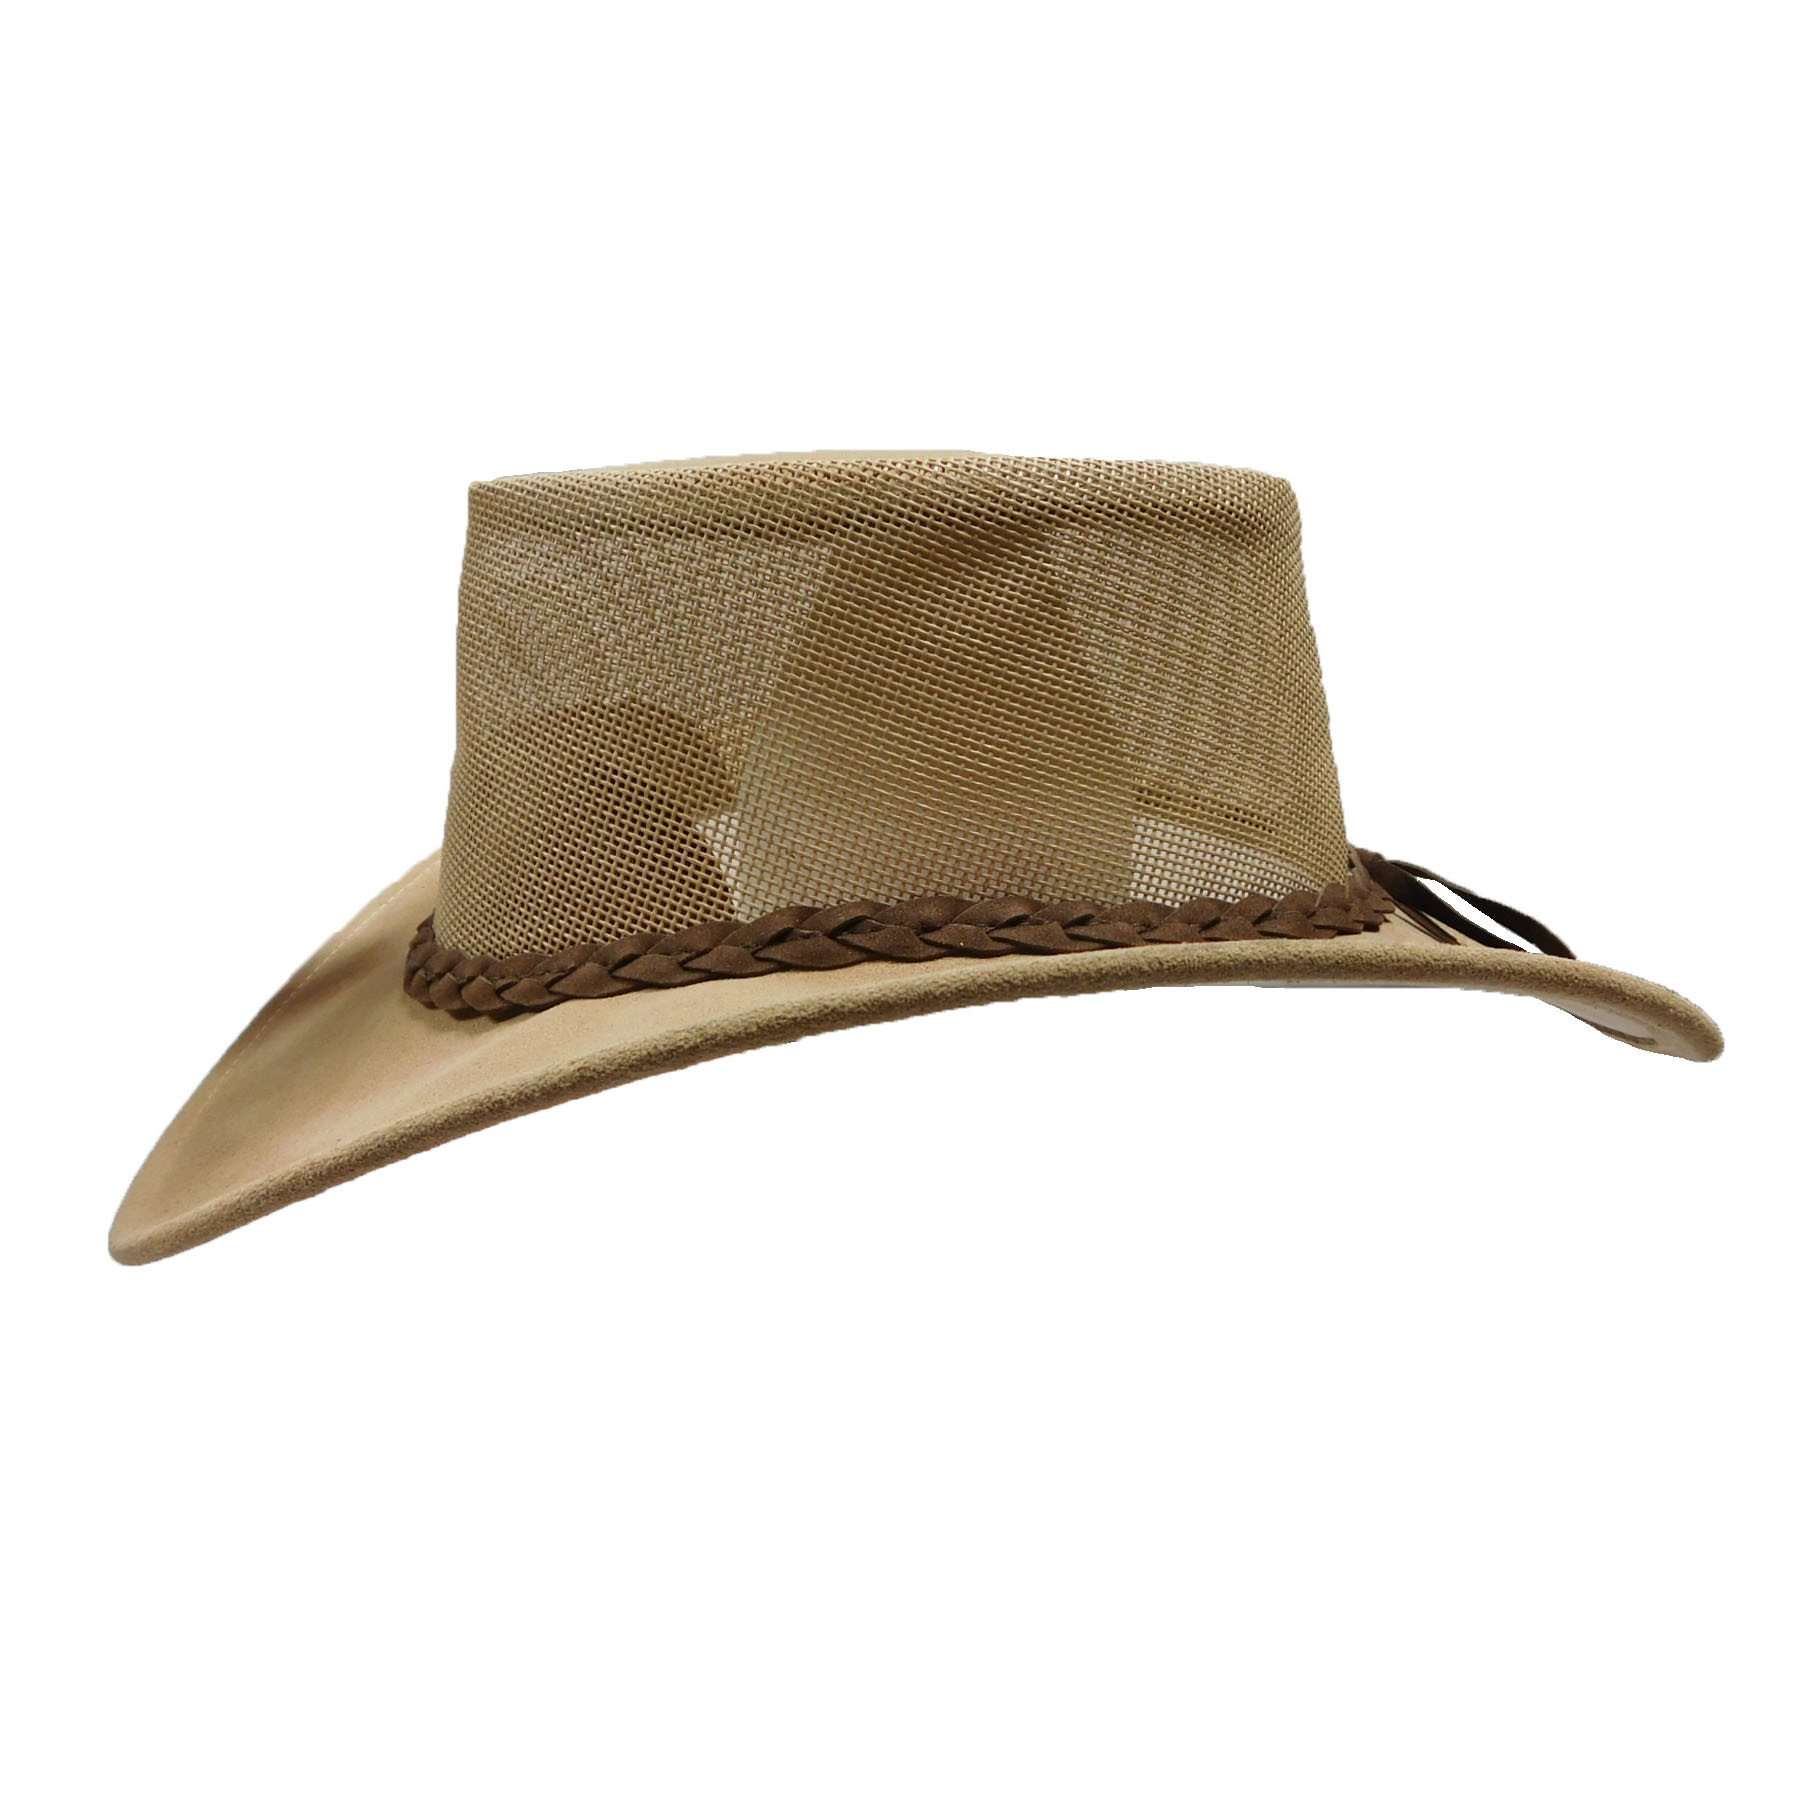 Bendigo Leather Hat by Kakadu Australia - Tan Safari Hat Kakadu    